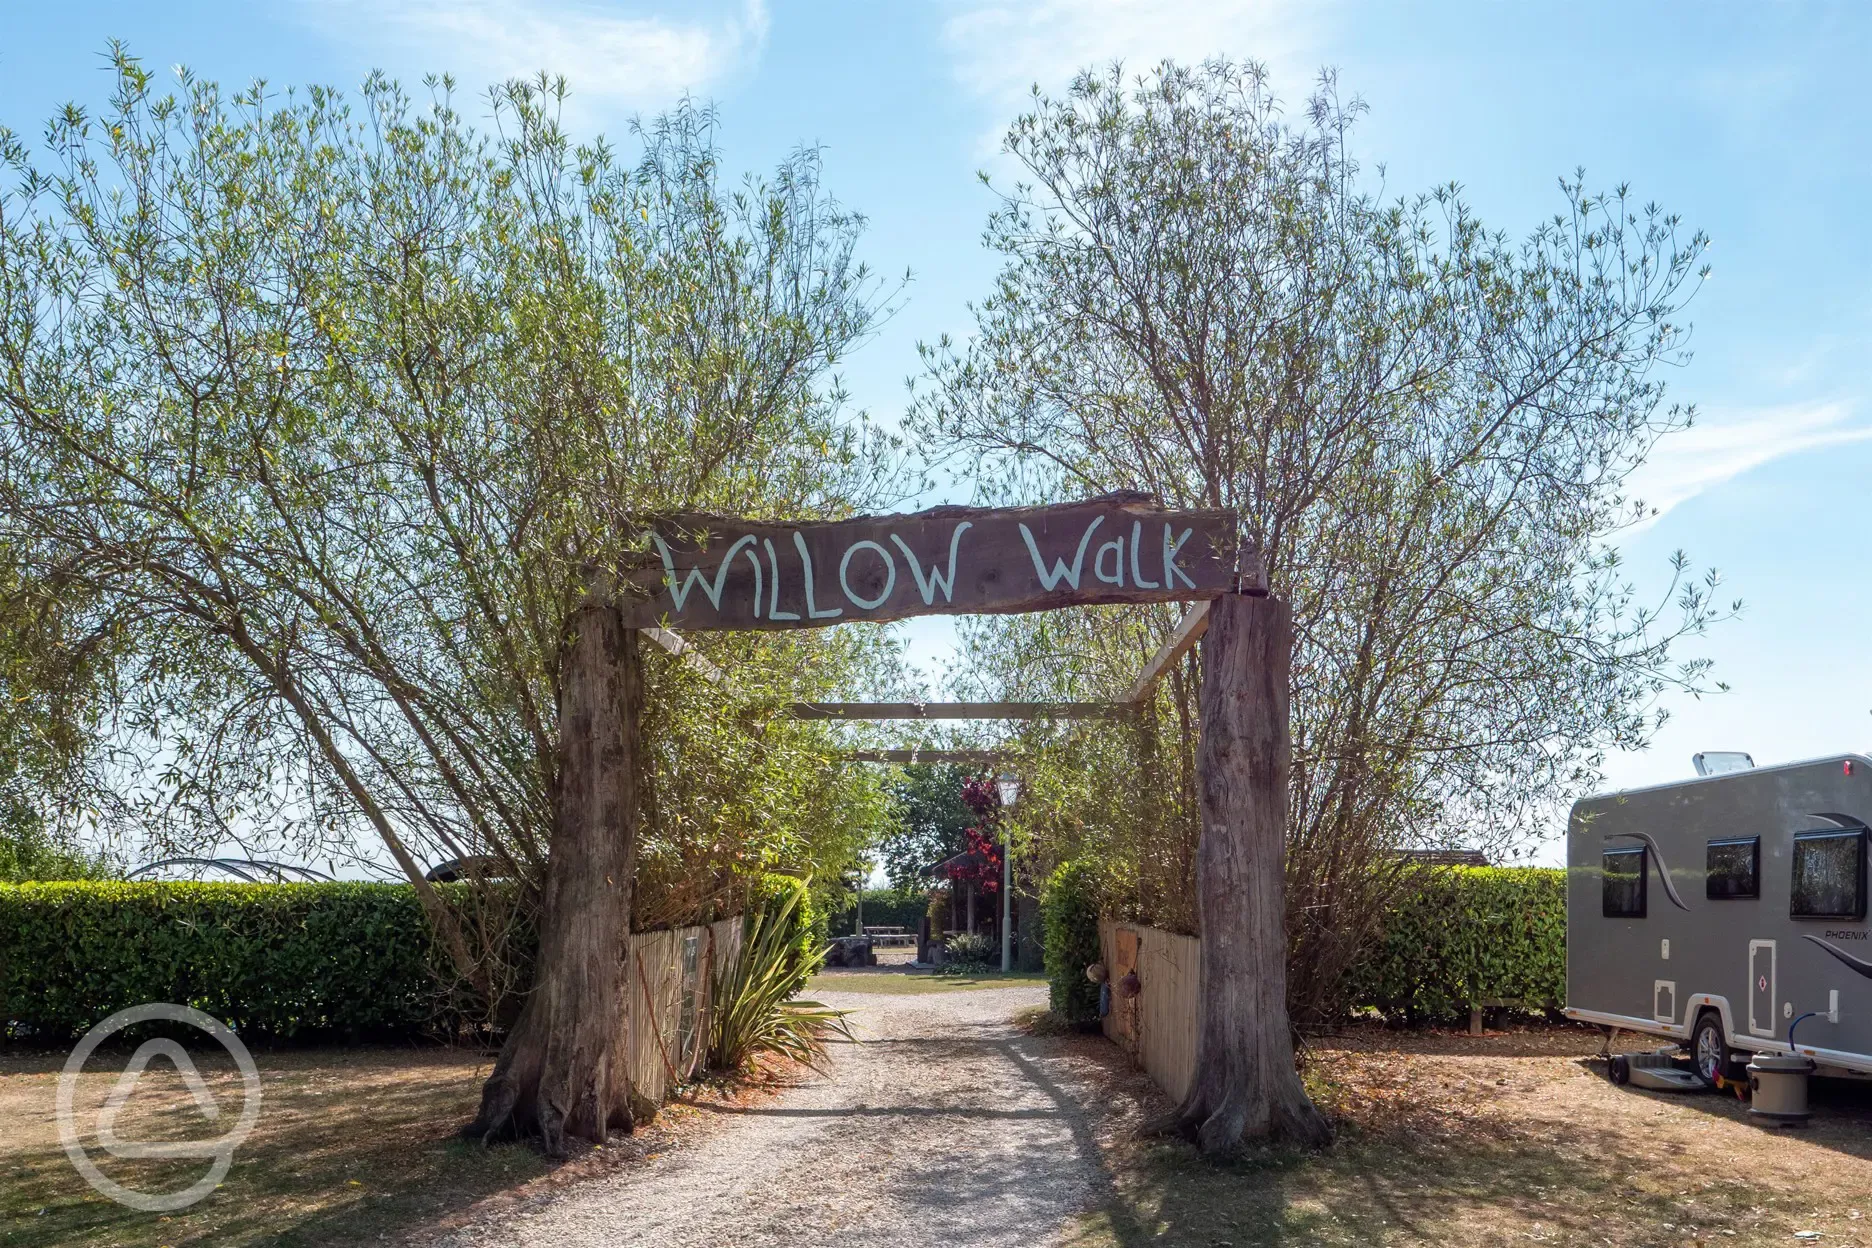 Willow walk